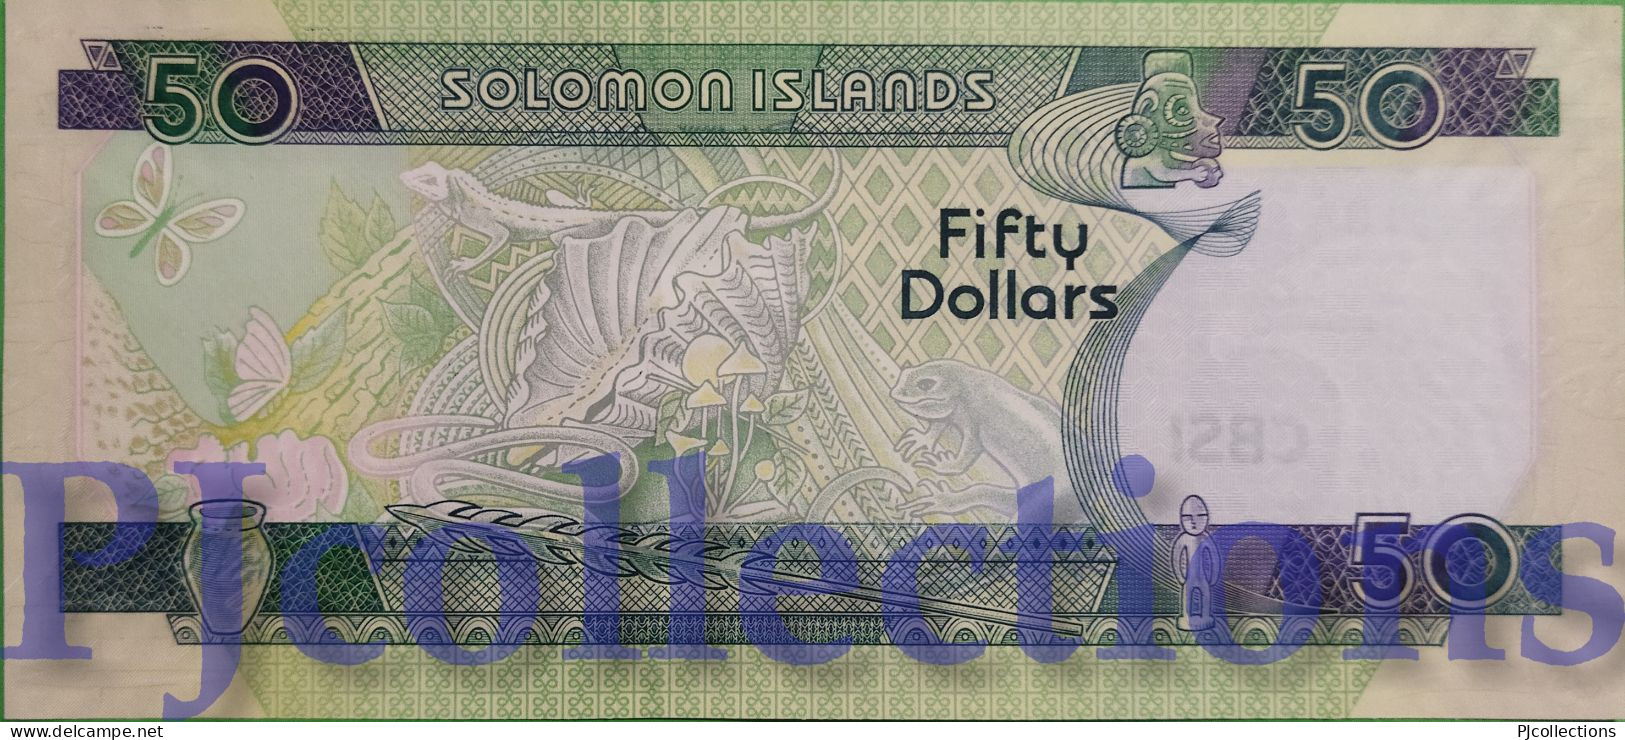 SOLOMON ISLANDS 50 DOLLARS 2004 PICK 29 UNC LOW SERIAL NUMBER "A/1 001038" - Isla Salomon